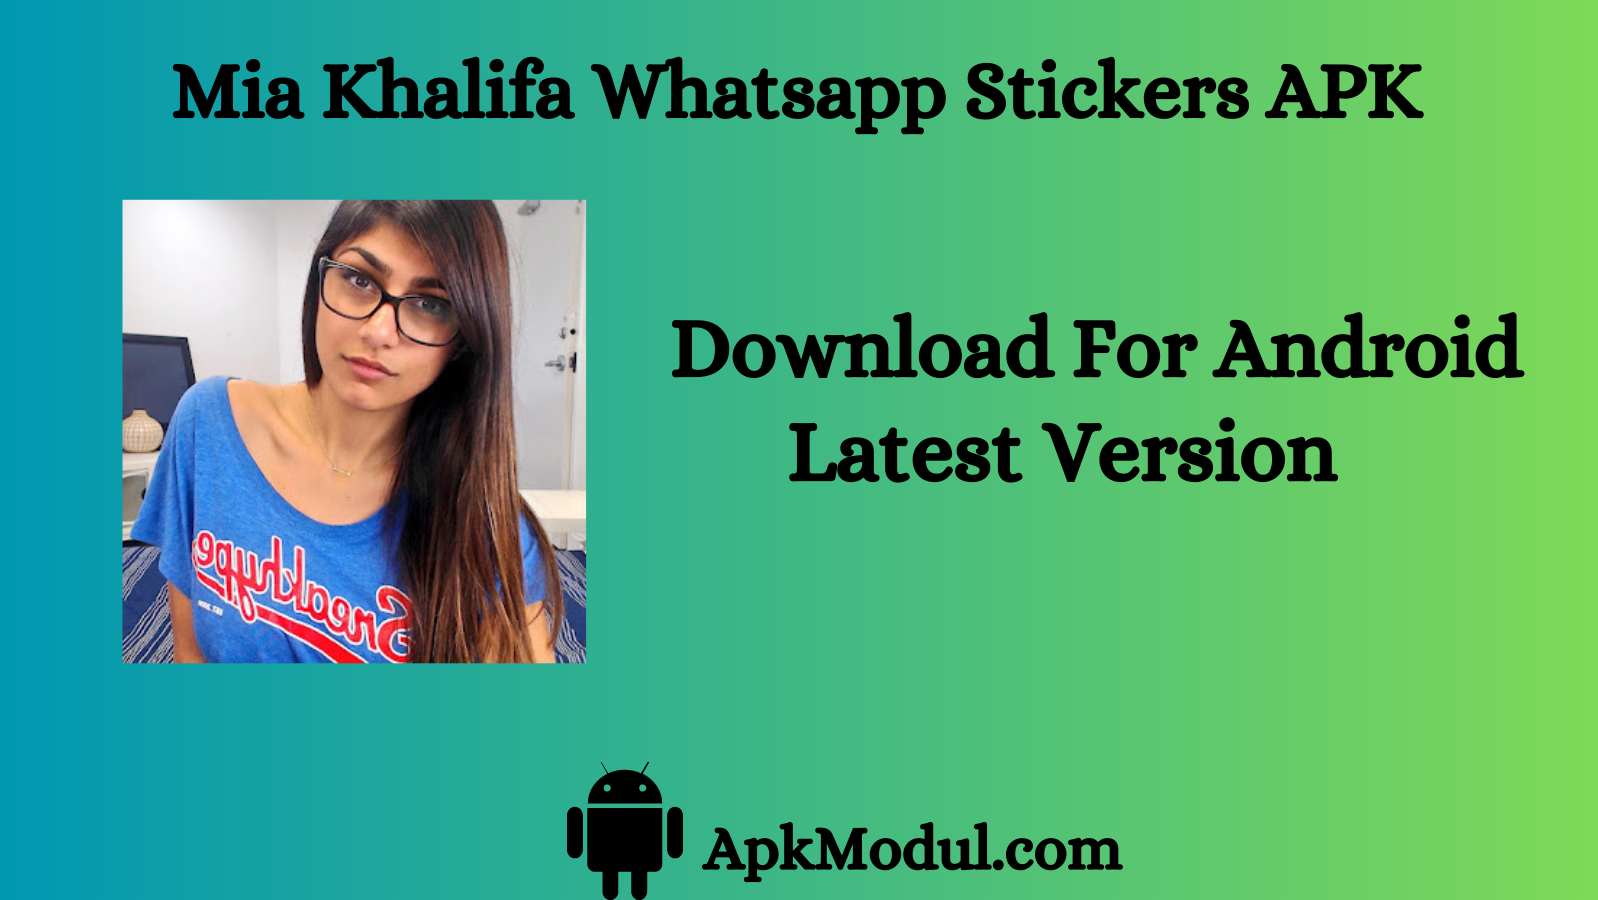 mia khalifa stickers whatsapp 